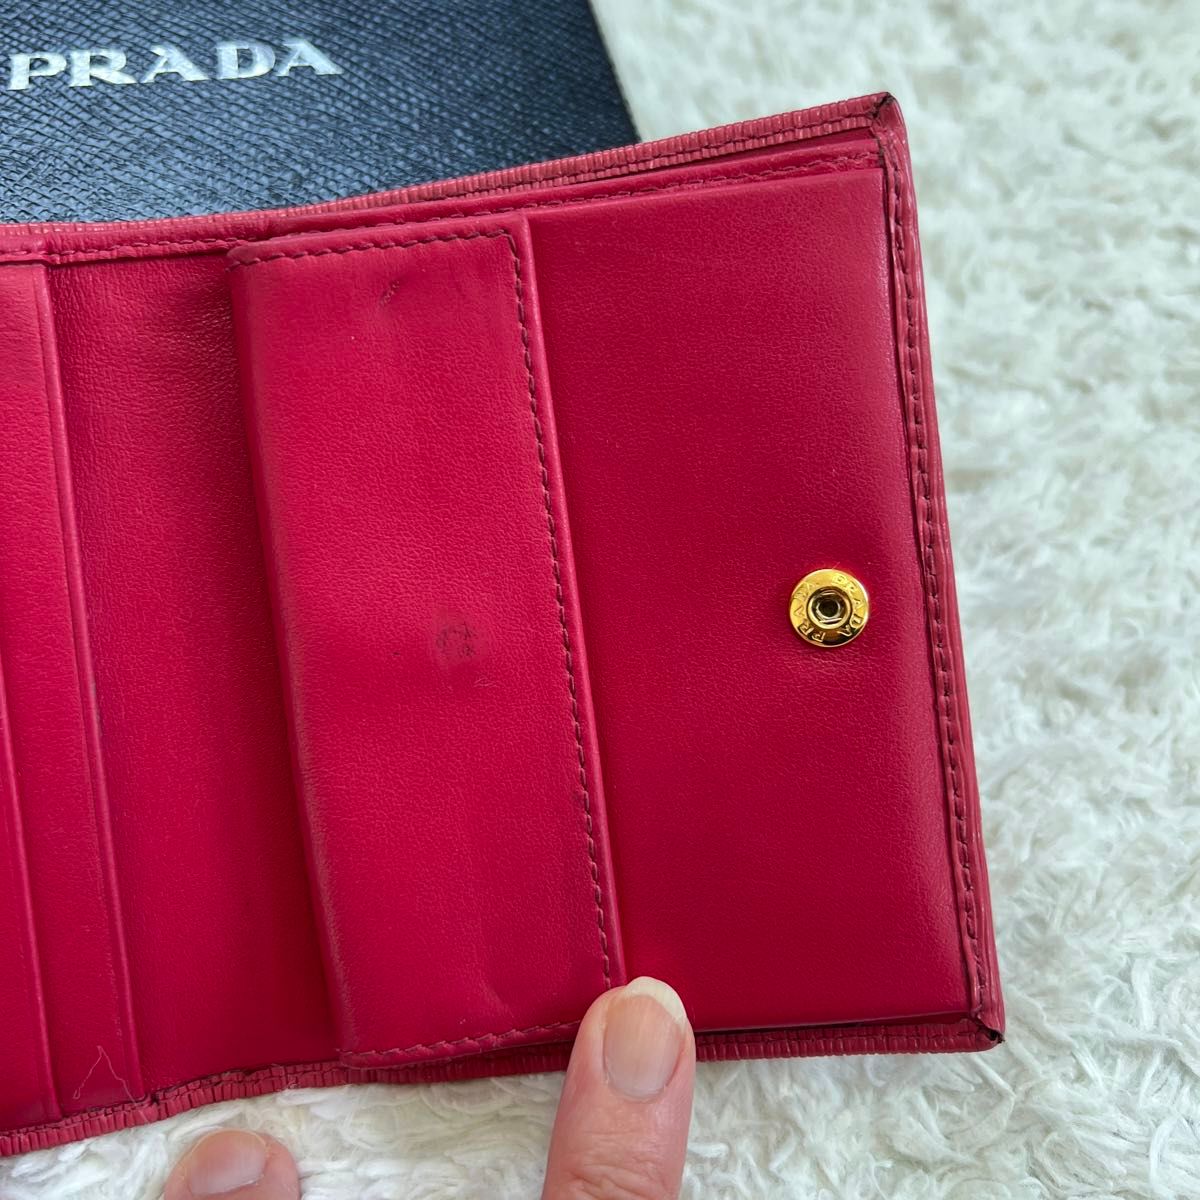 PRADA プラダ サフィアーノレザー 二つ折り財布 財布 ピンク系